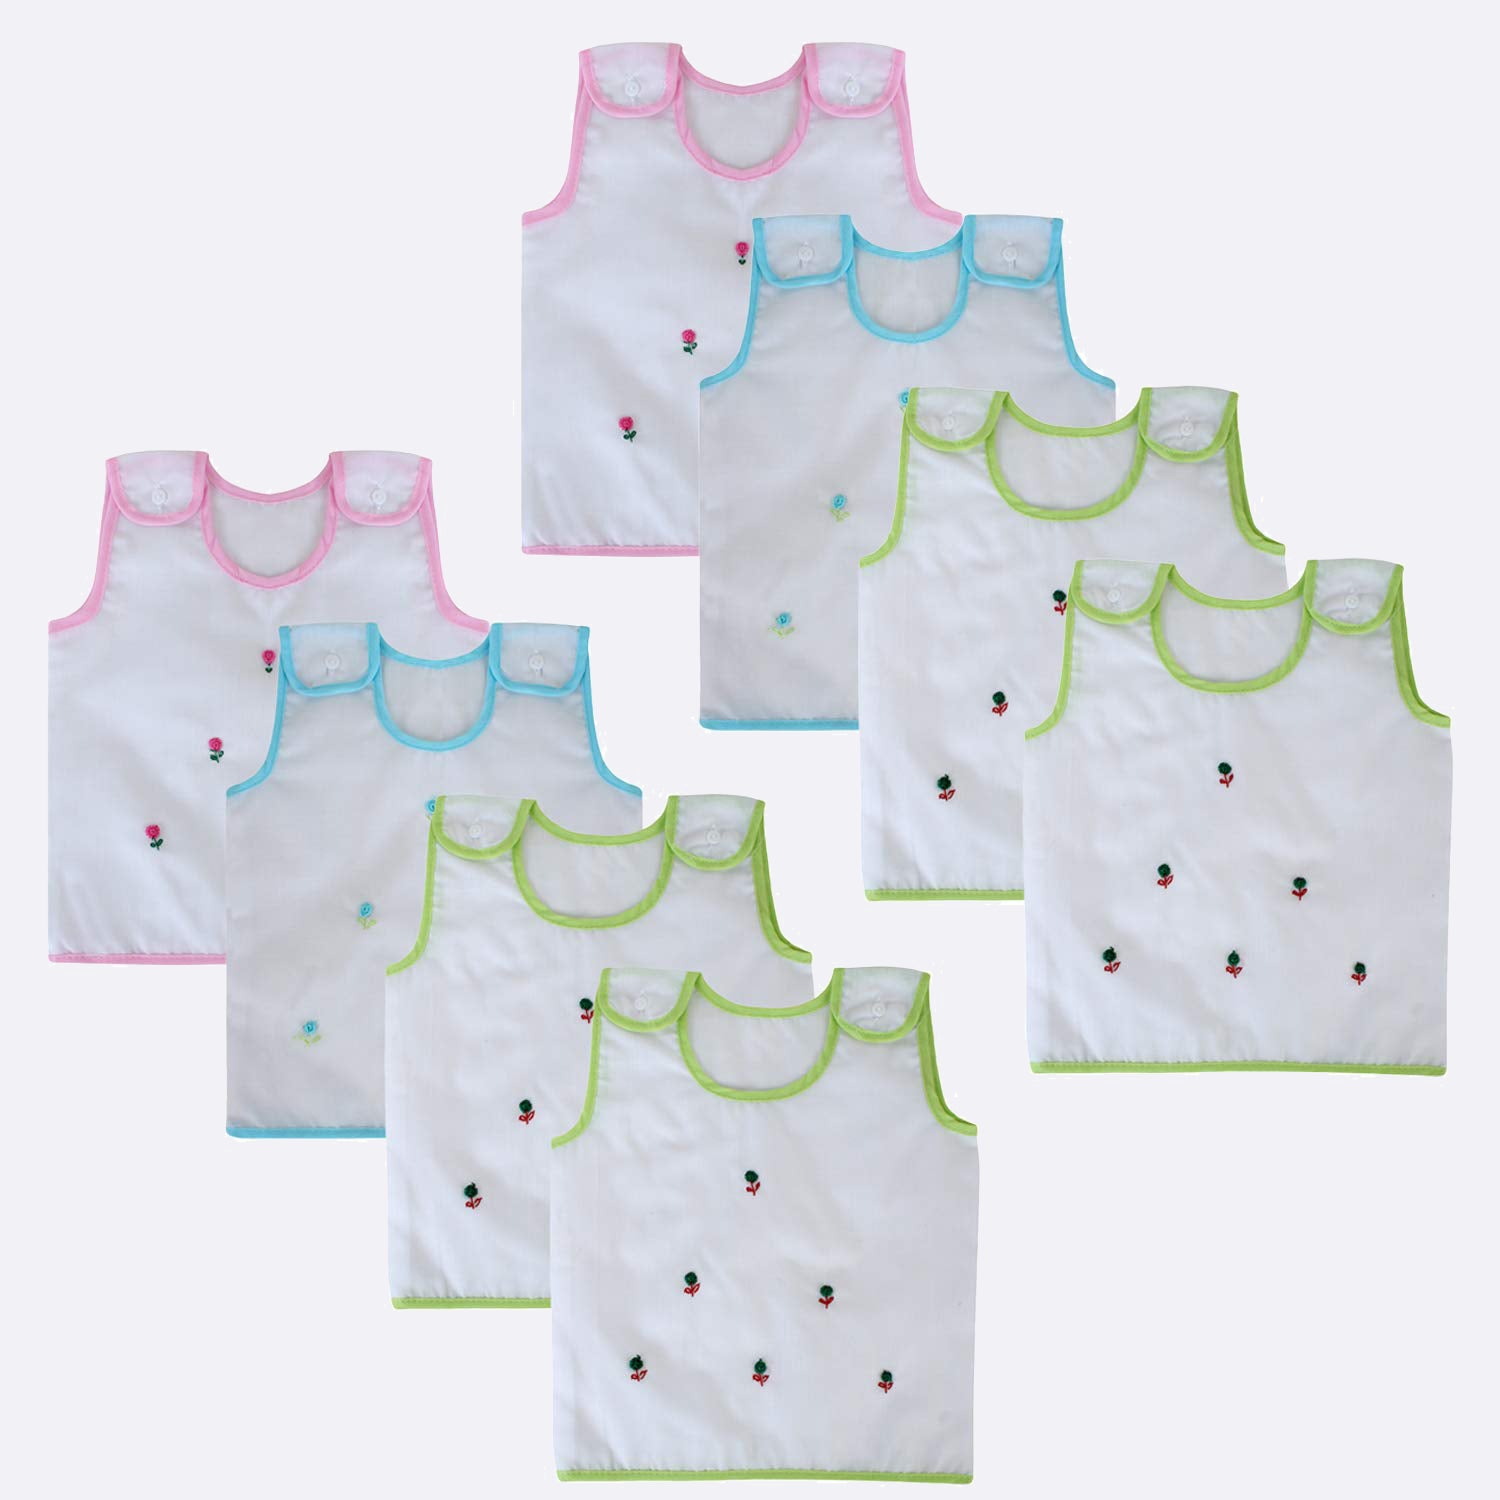 Soft and Cozy Jhabla Vest for New Born